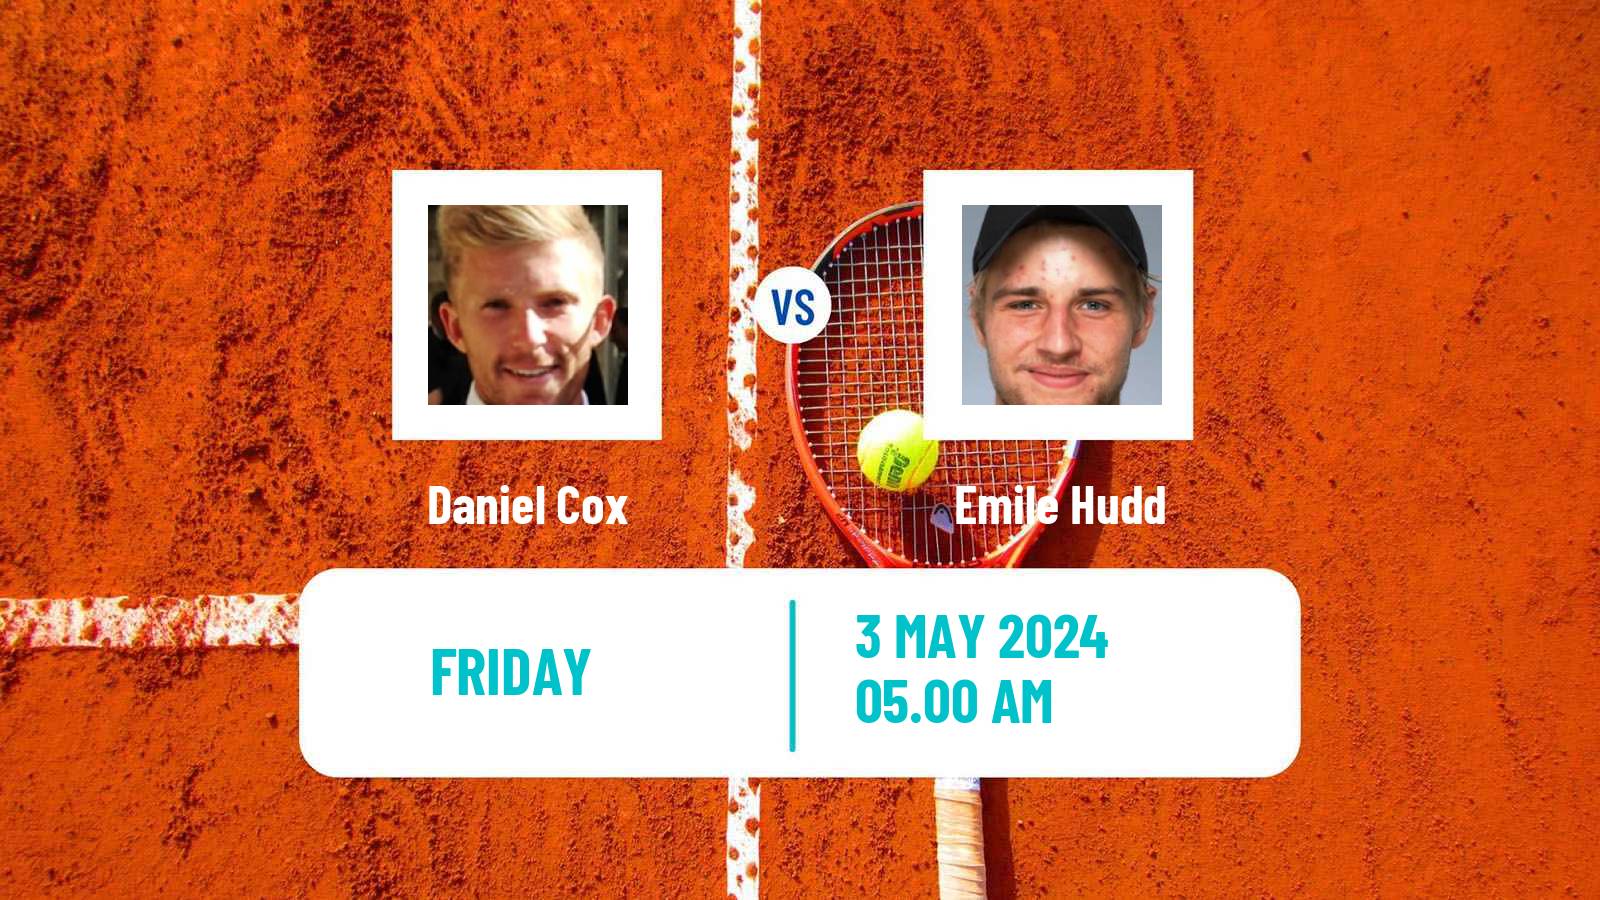 Tennis ITF M25 Nottingham 2 Men Daniel Cox - Emile Hudd